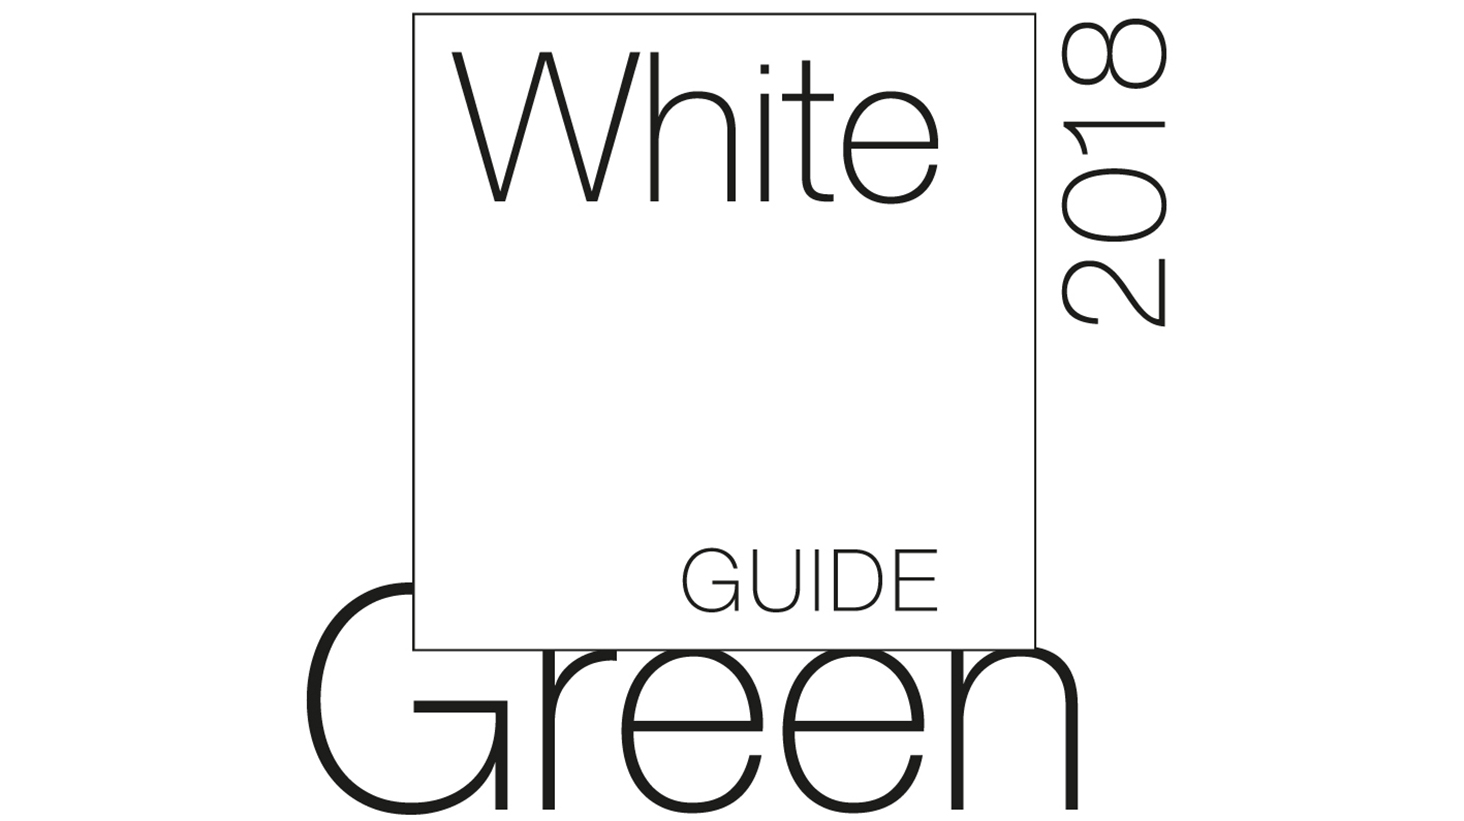 Coops butiker bäst på eko, vego och matsvinn i White Guide Green